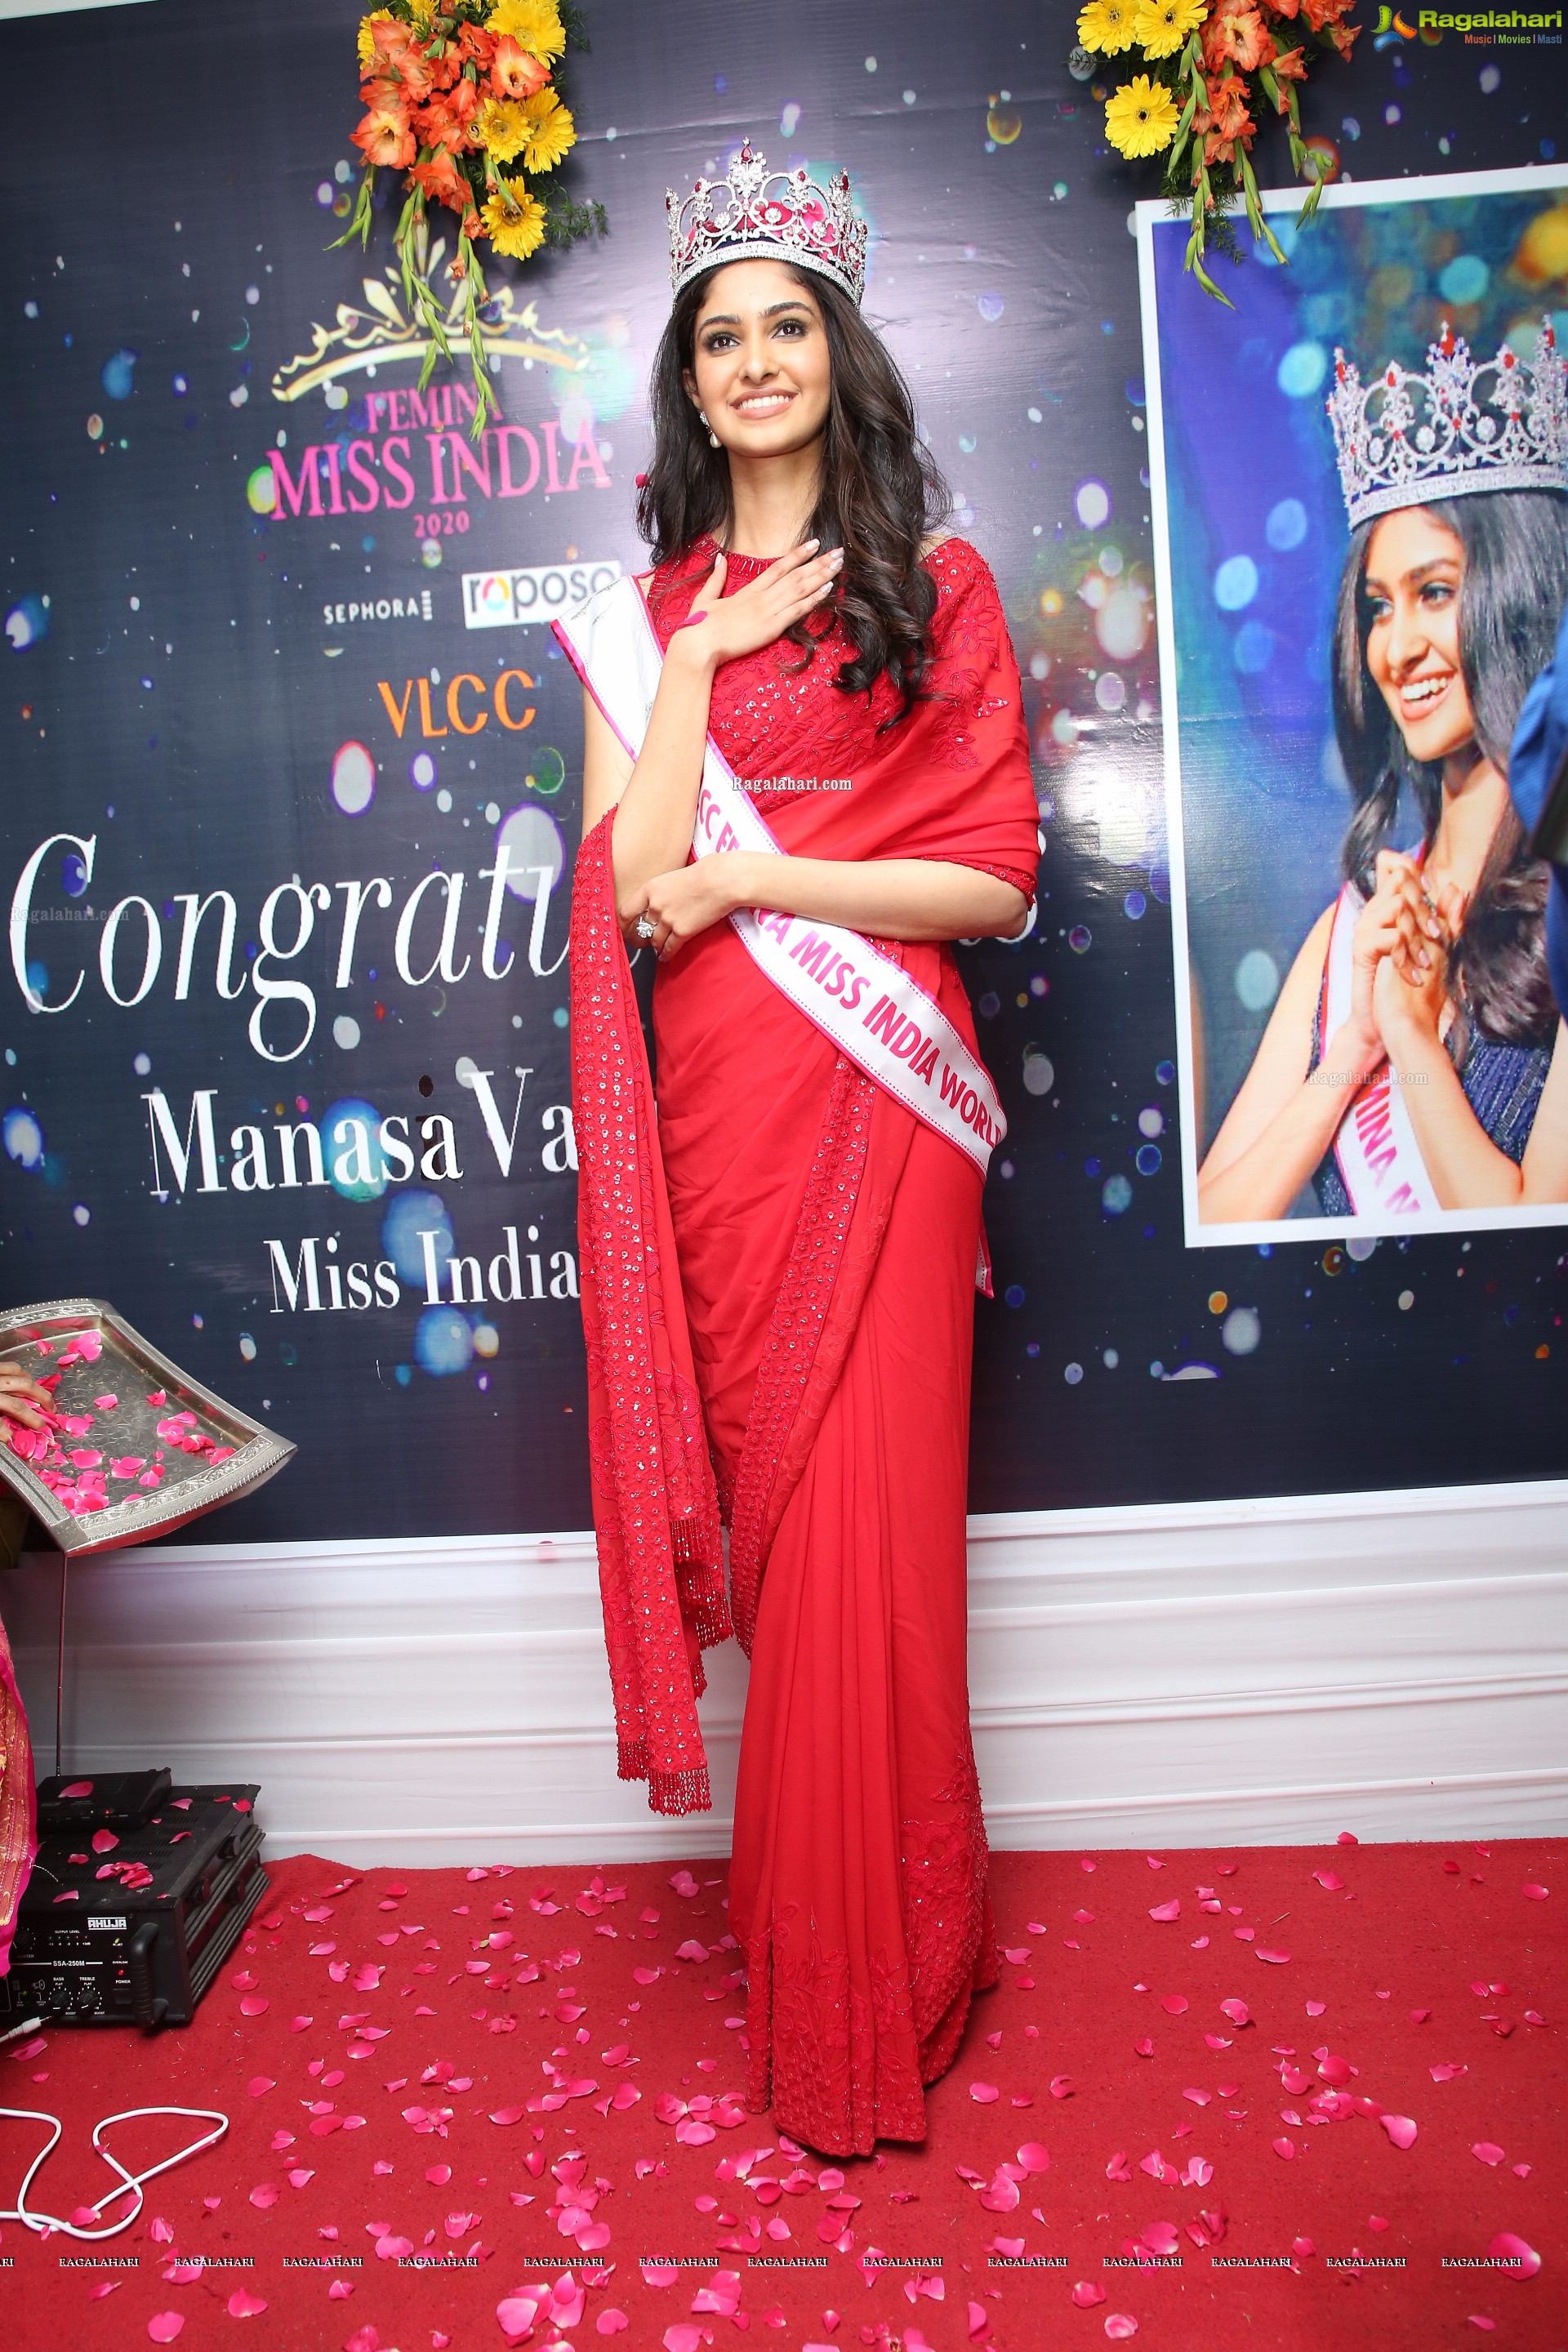 Femina Miss Miss India world 2020 Manasa Varanasi at Welcome Party at Home After Winning The Title